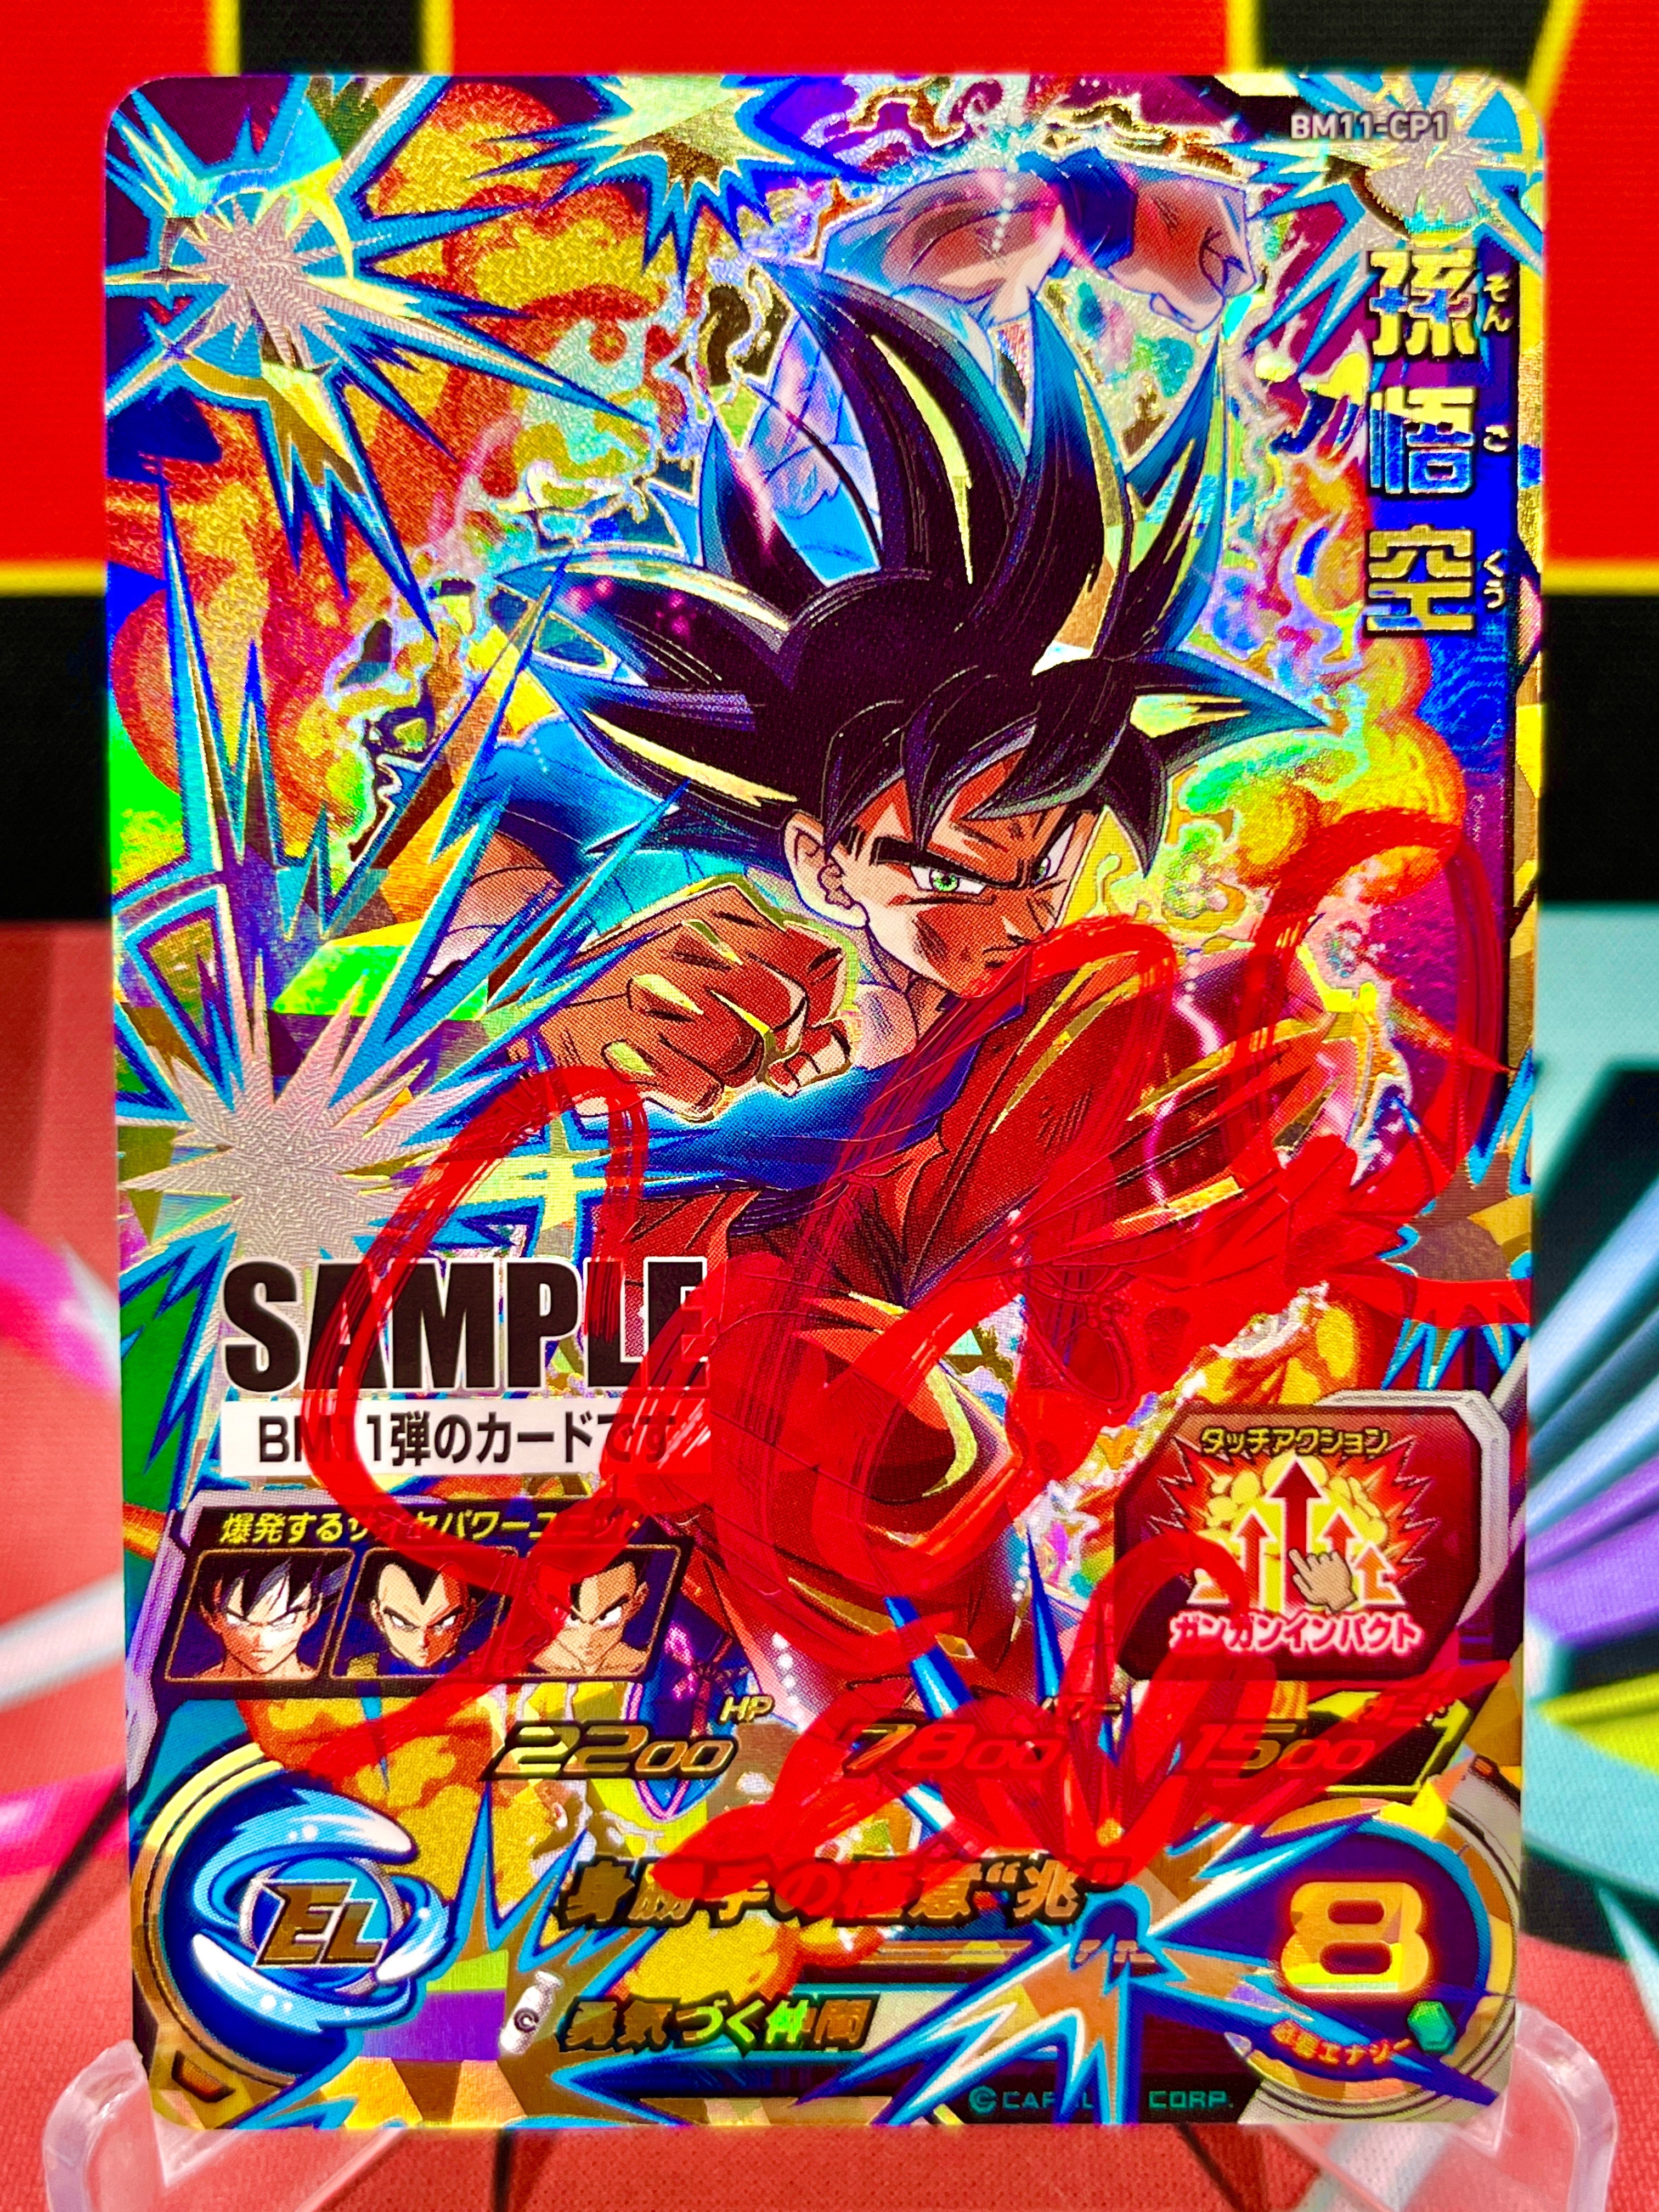 BM11-CP1 Son Goku CP SAMPLE (2021) Autographed by Sean Schemmel